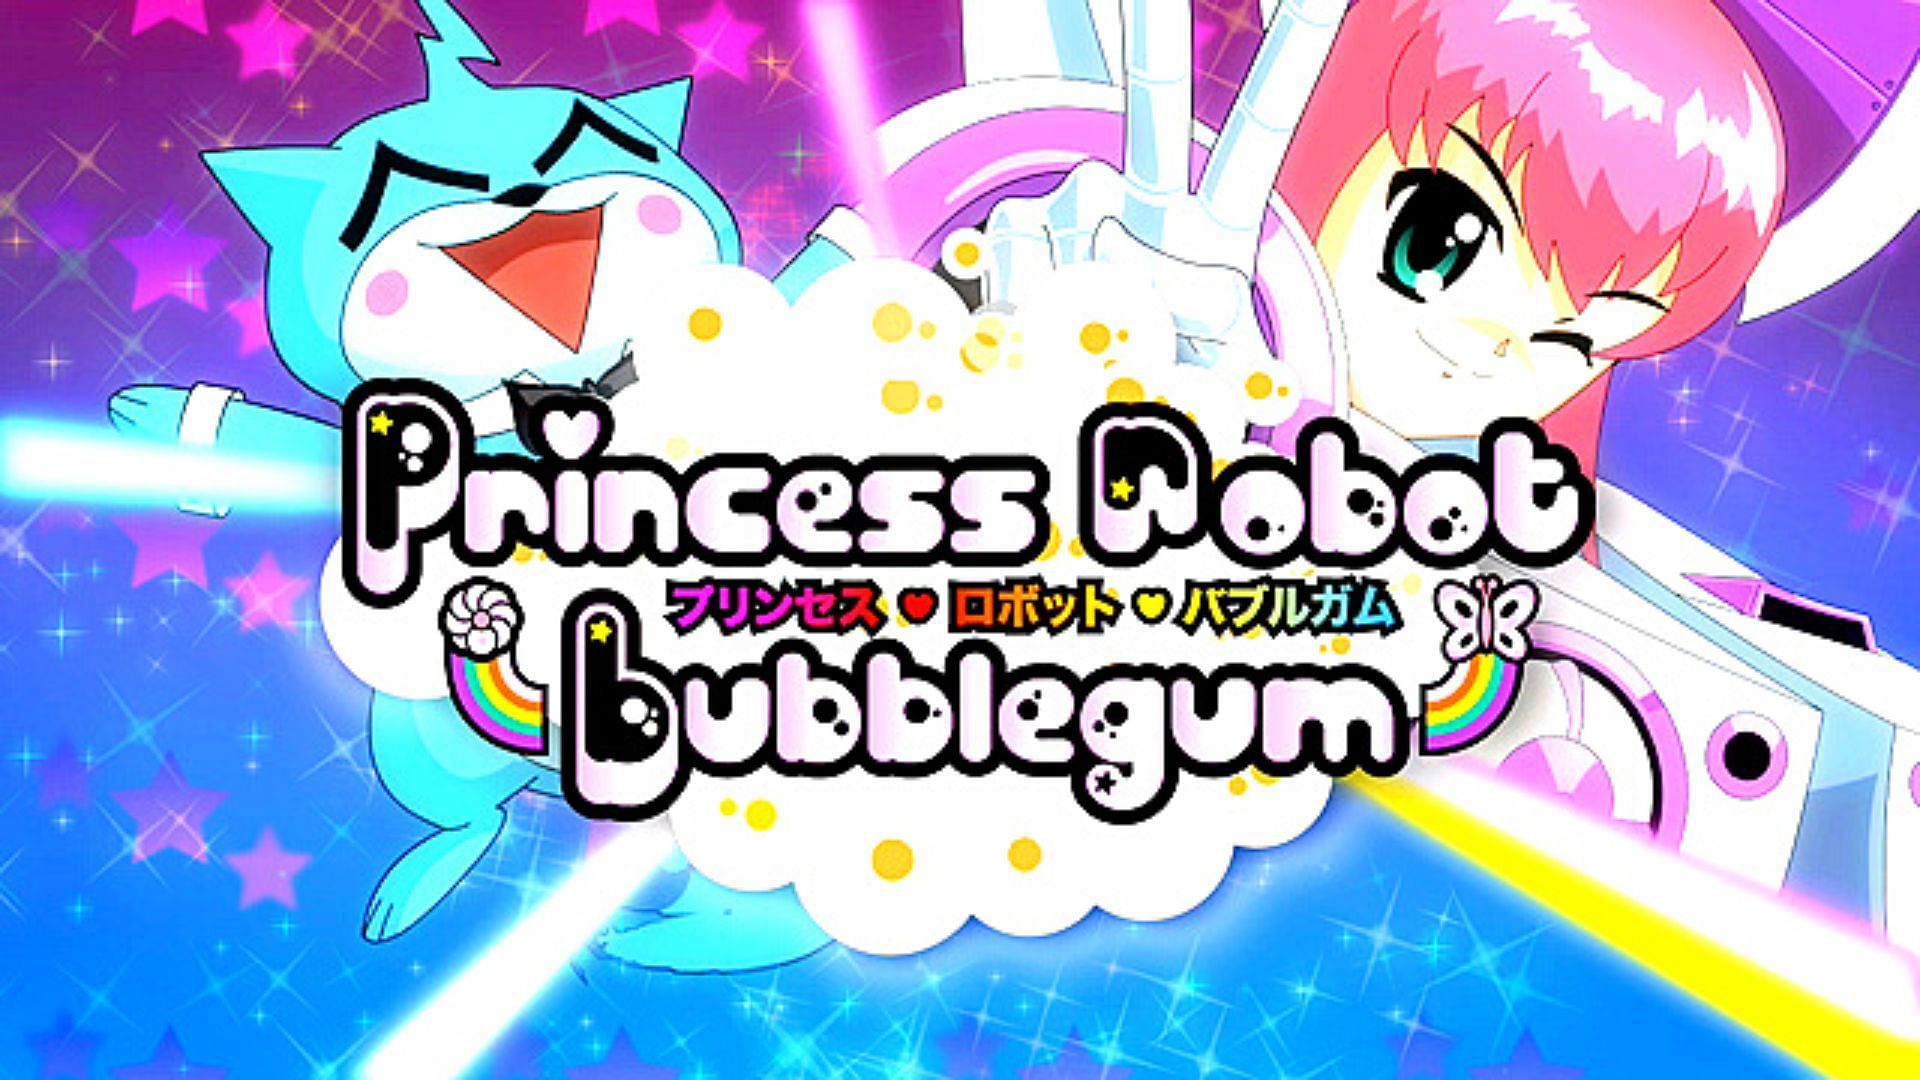 Robot princess bubblegum